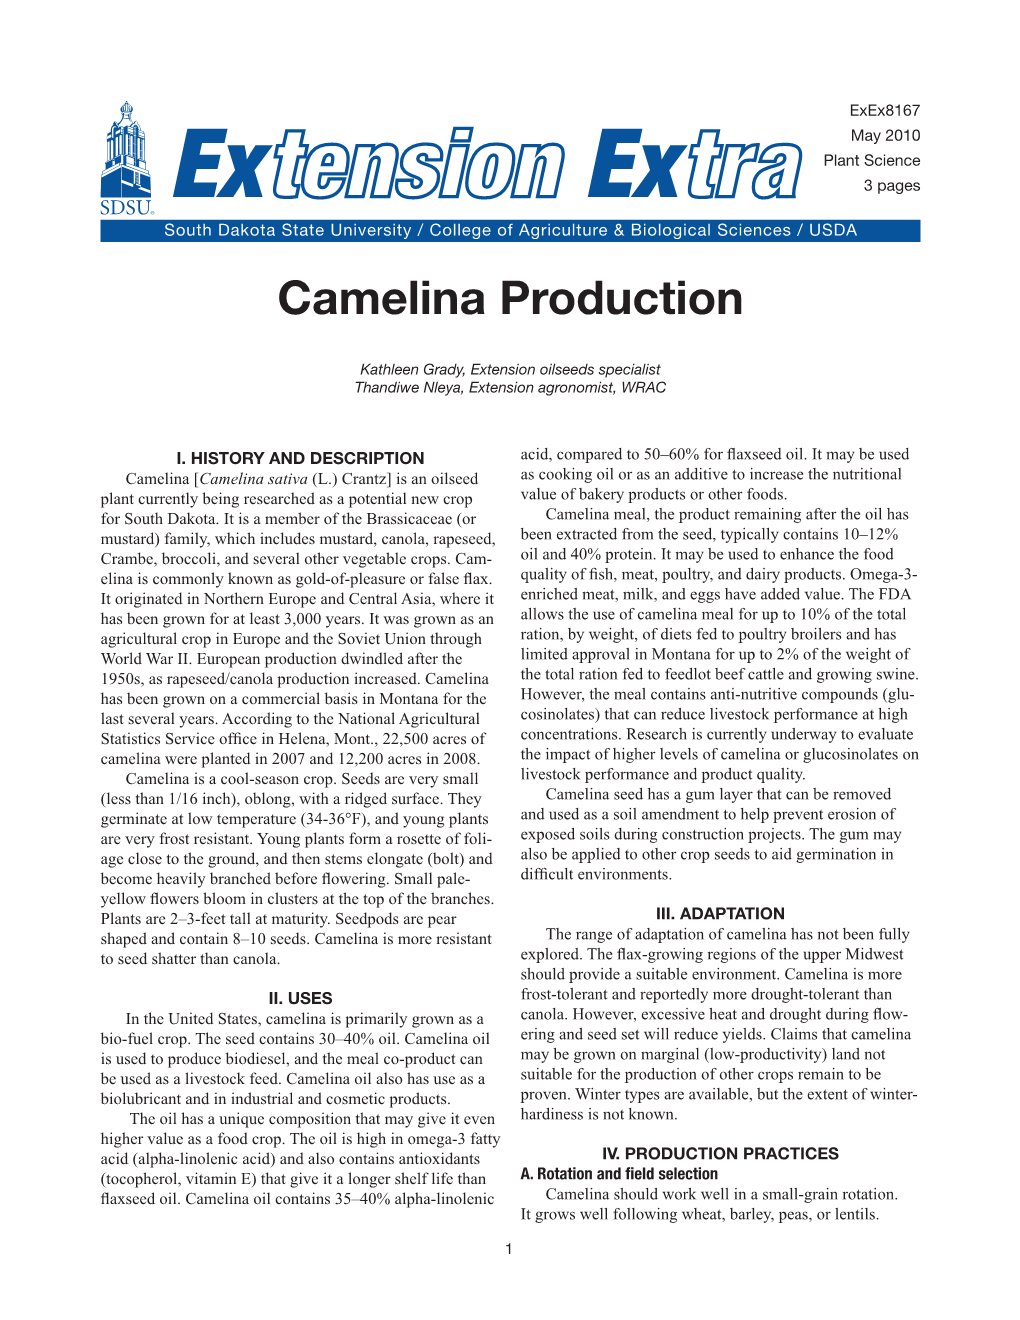 Camelina Production